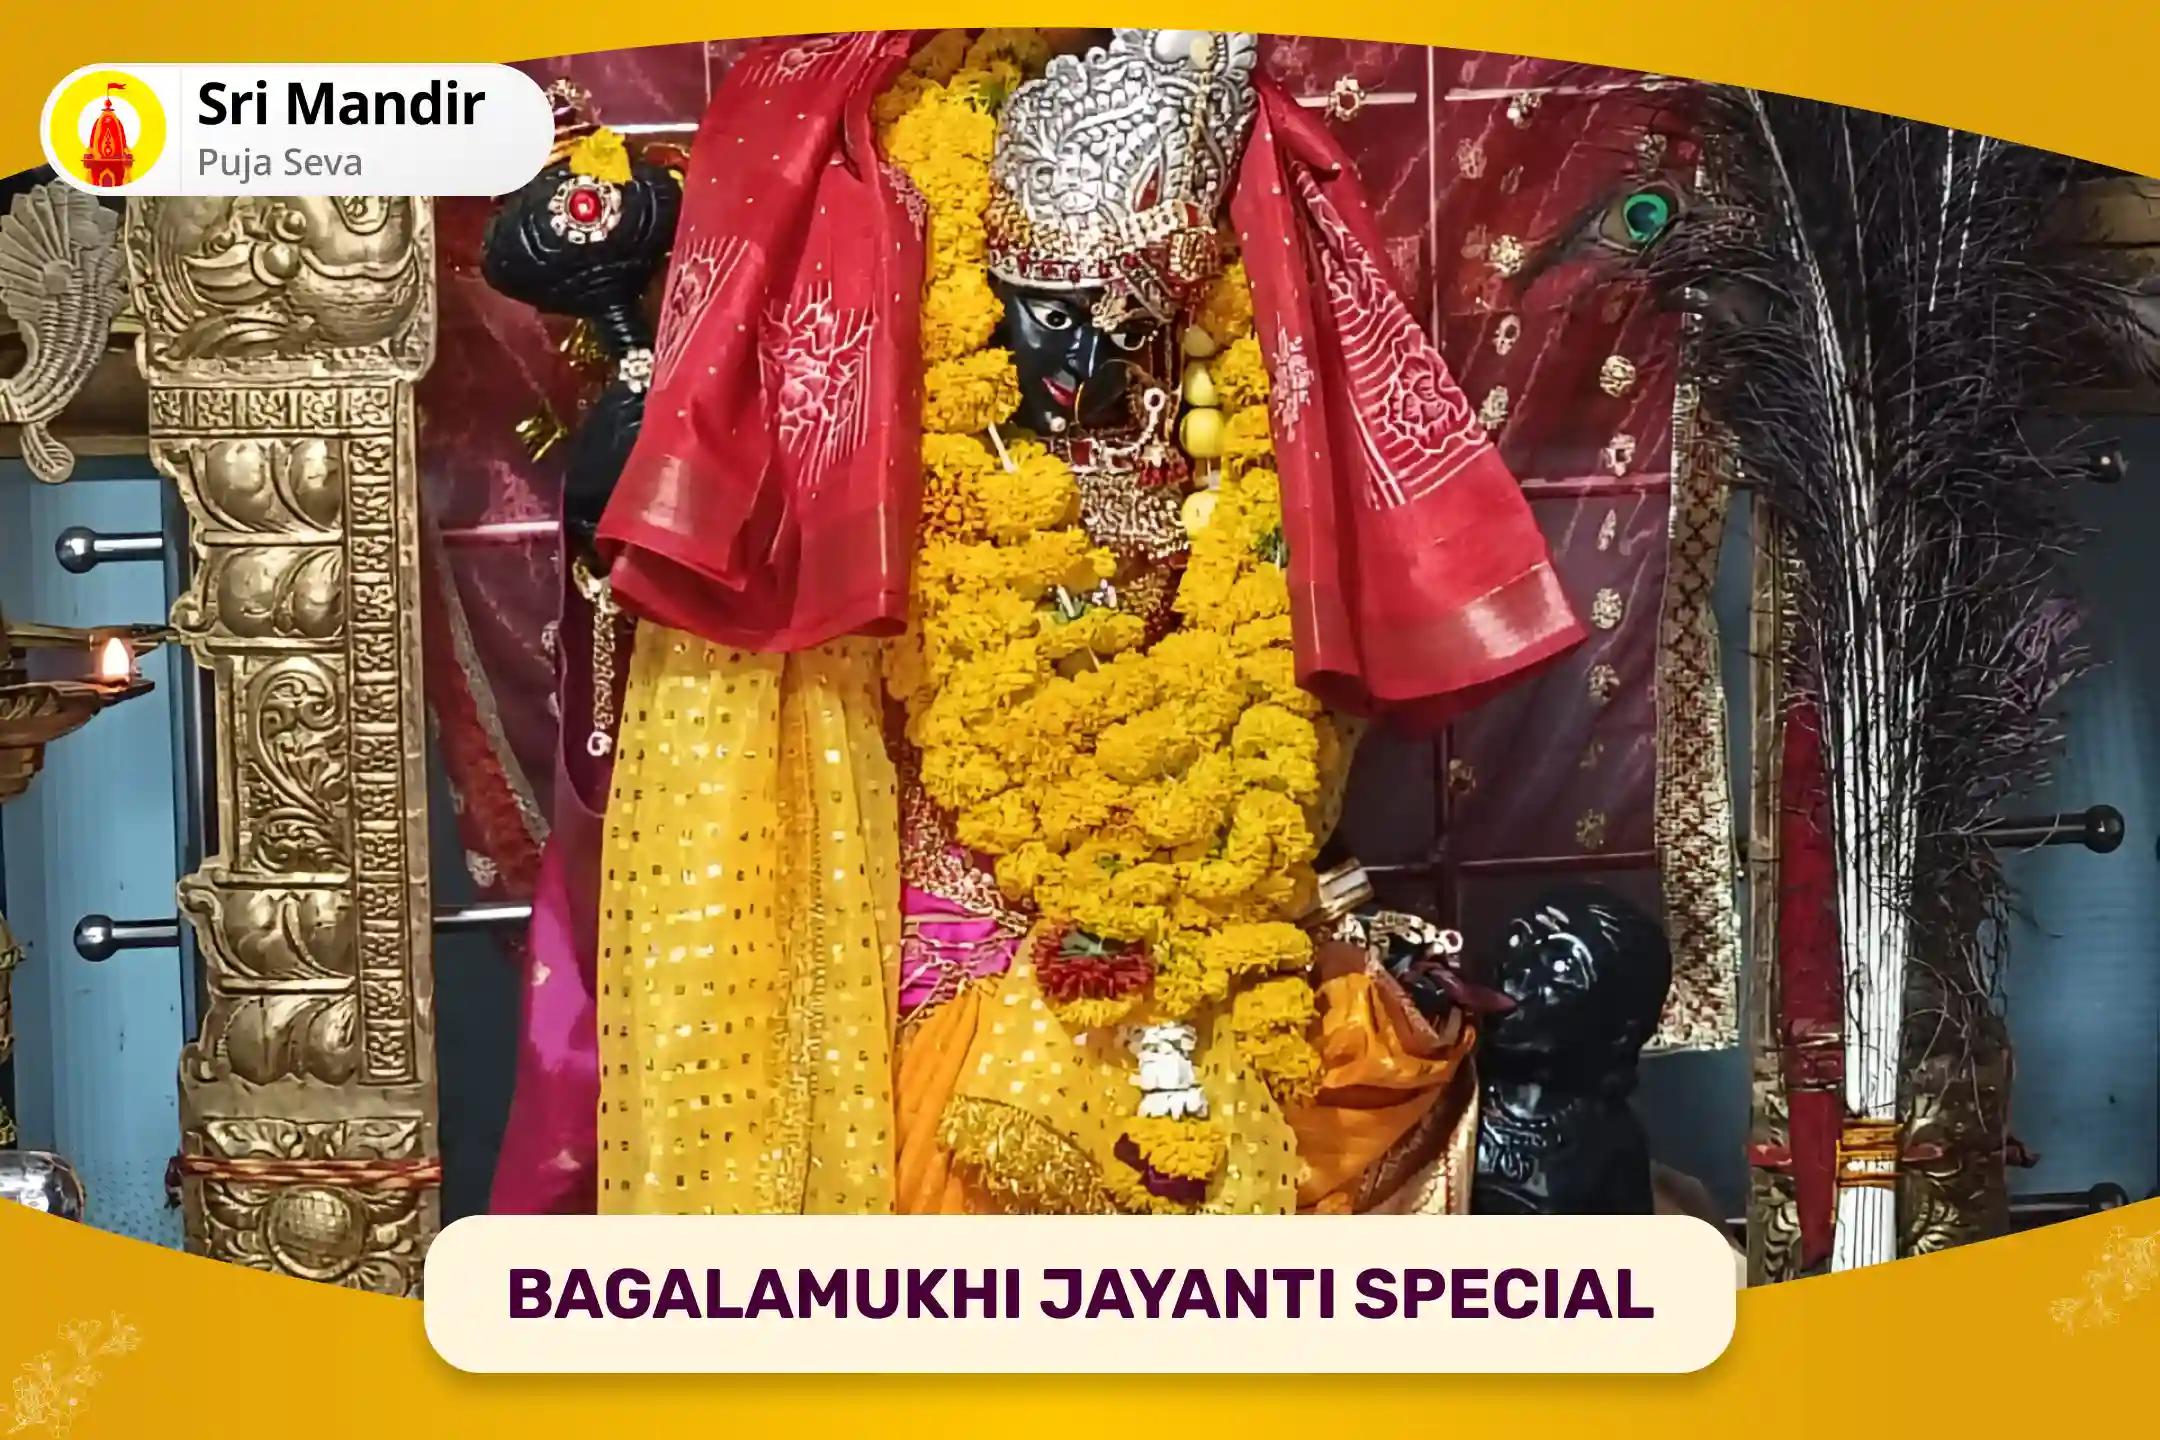 Bagalamukhi Jayanti Special Sarv Karya Siddhi Maa Bagalamukhi Tantra Yukta Mahayagya for Fulfilment of all Desires